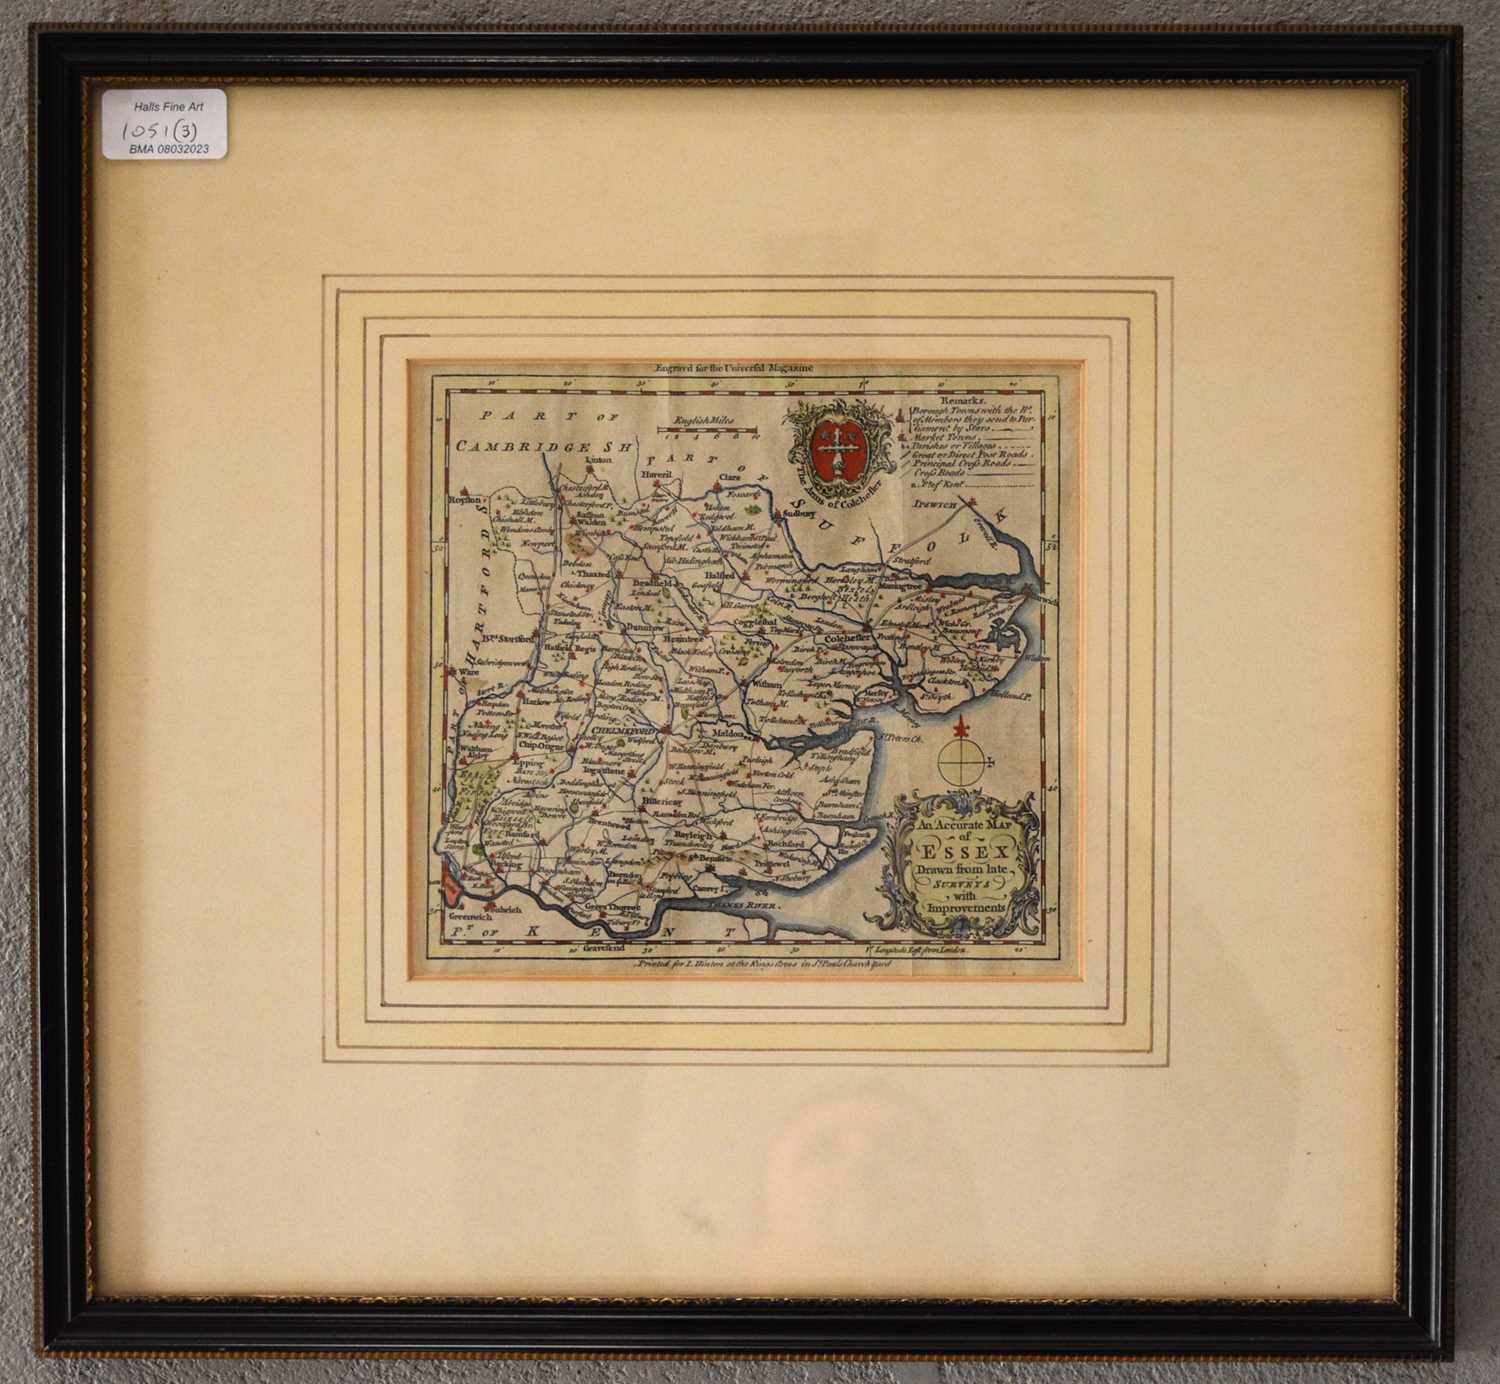 Lot 1051 - SAXTON & KIP, Map of Caermardi (Carmarthen), 1610.